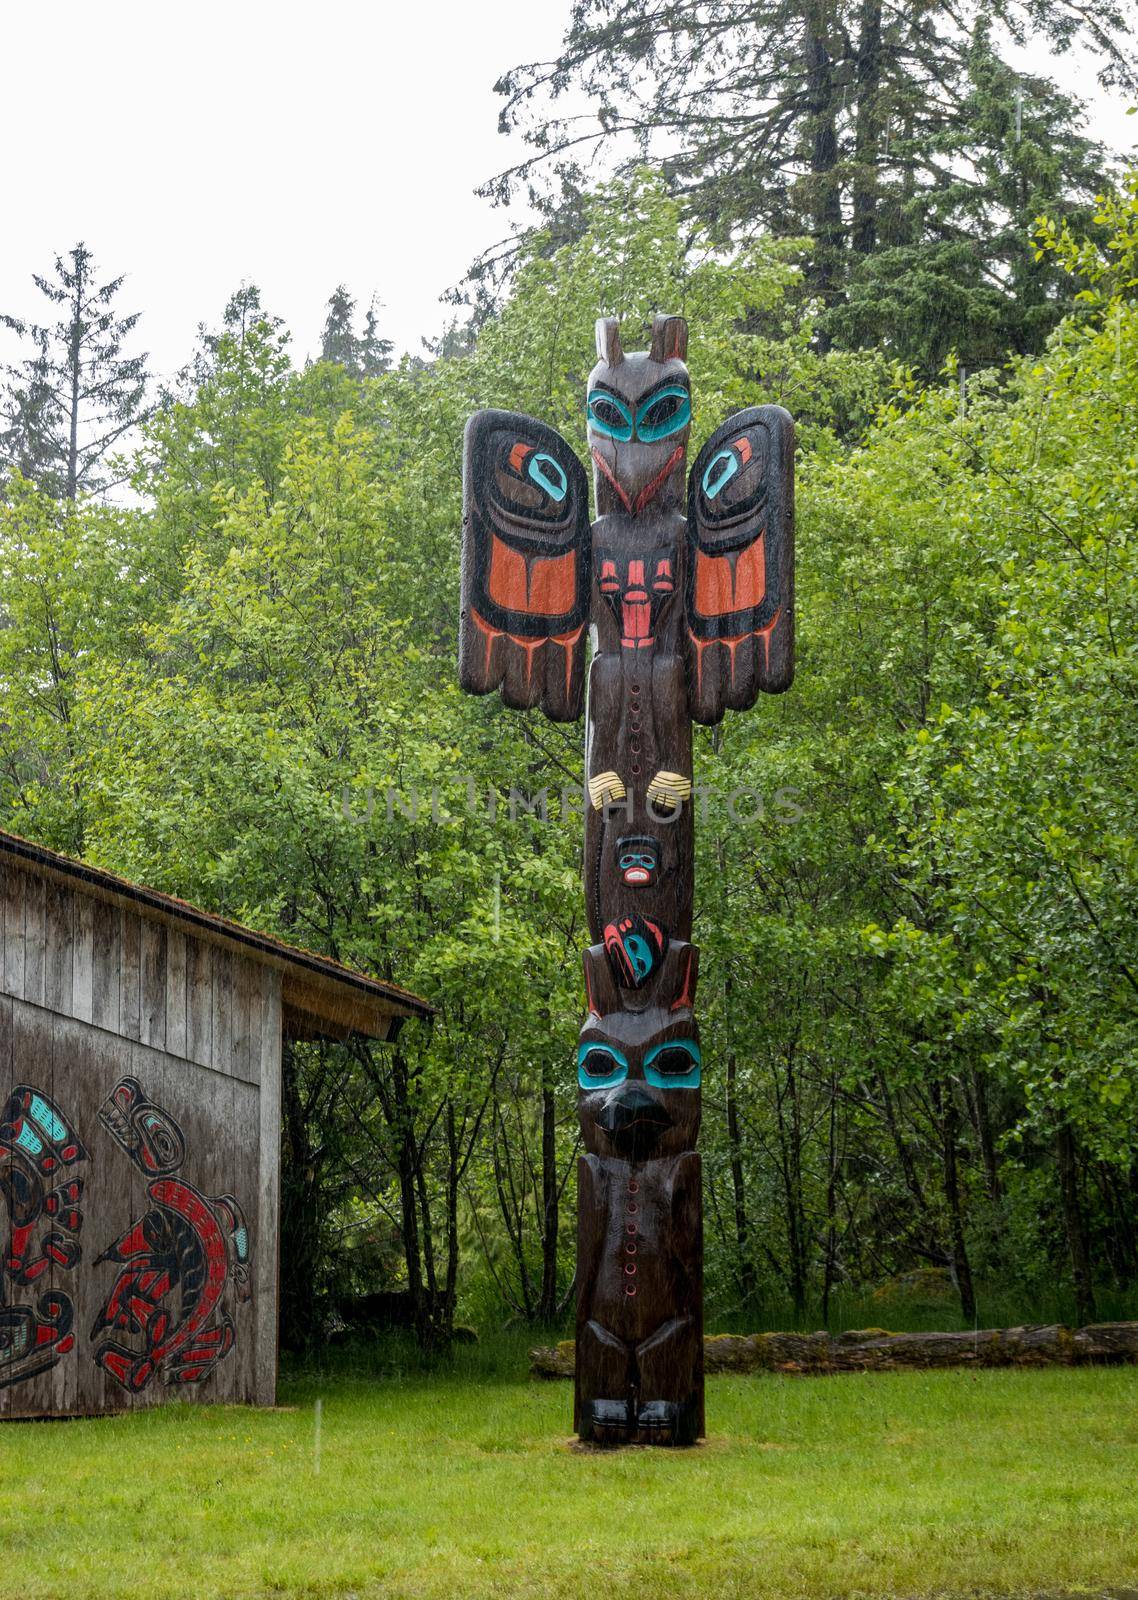 Ketchikan, AK - 10 June 2022: Totem pole in Potlatch Park in Ketchikan Alaska